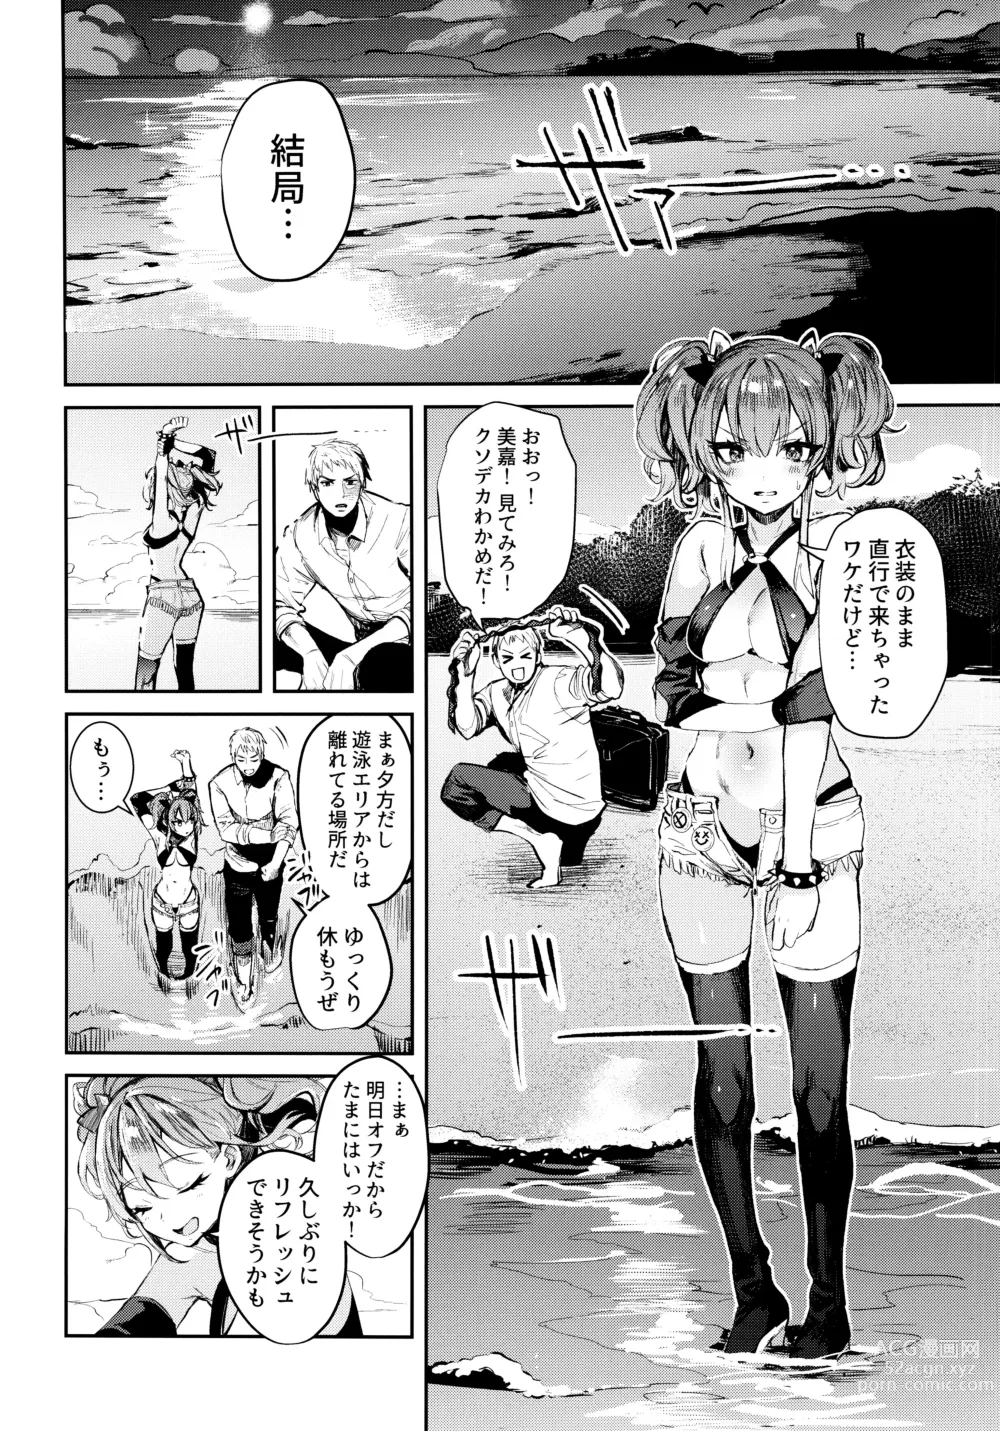 Page 7 of doujinshi Mika to Futari de.